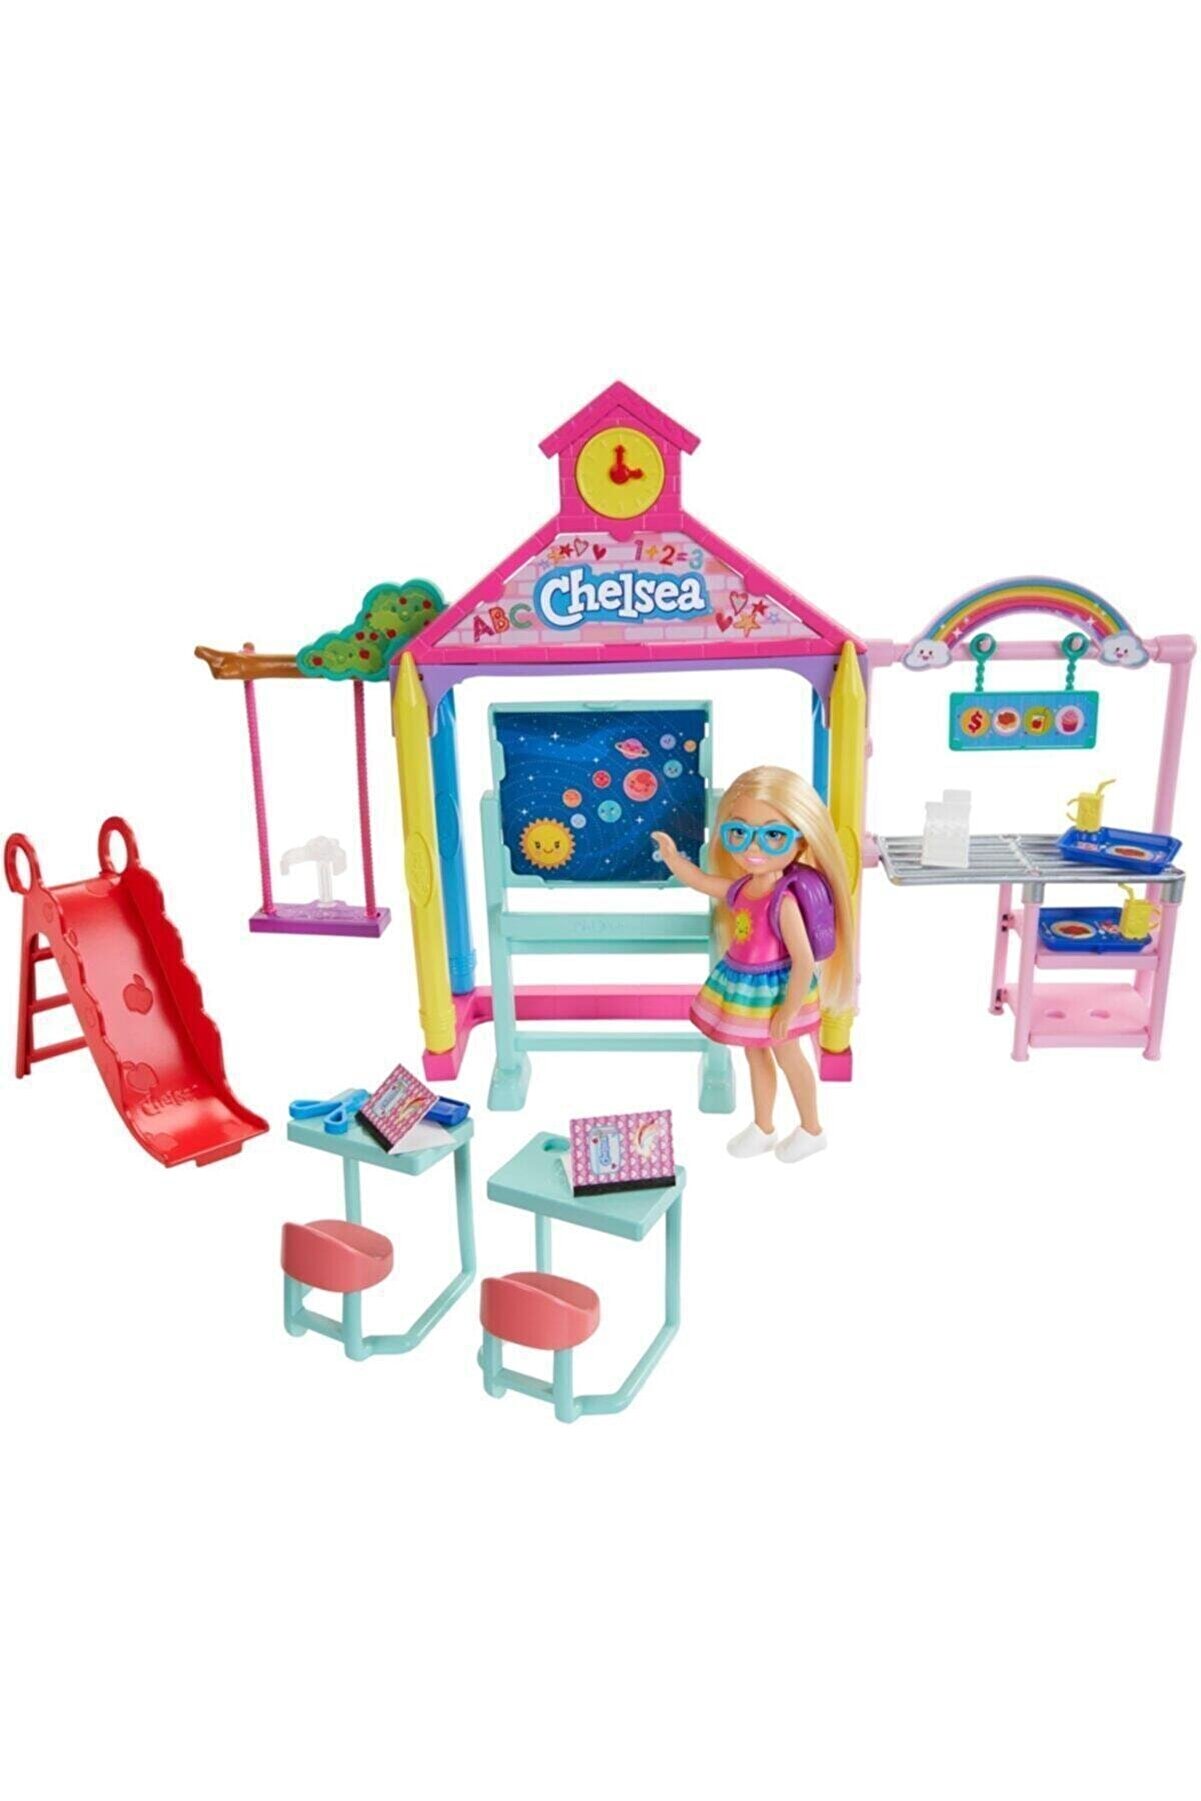 Barbie ® Chelsea Okulda Oyun Seti, 15 cm boyunda, sarışın, aksesuarlı GHV80-GHV80